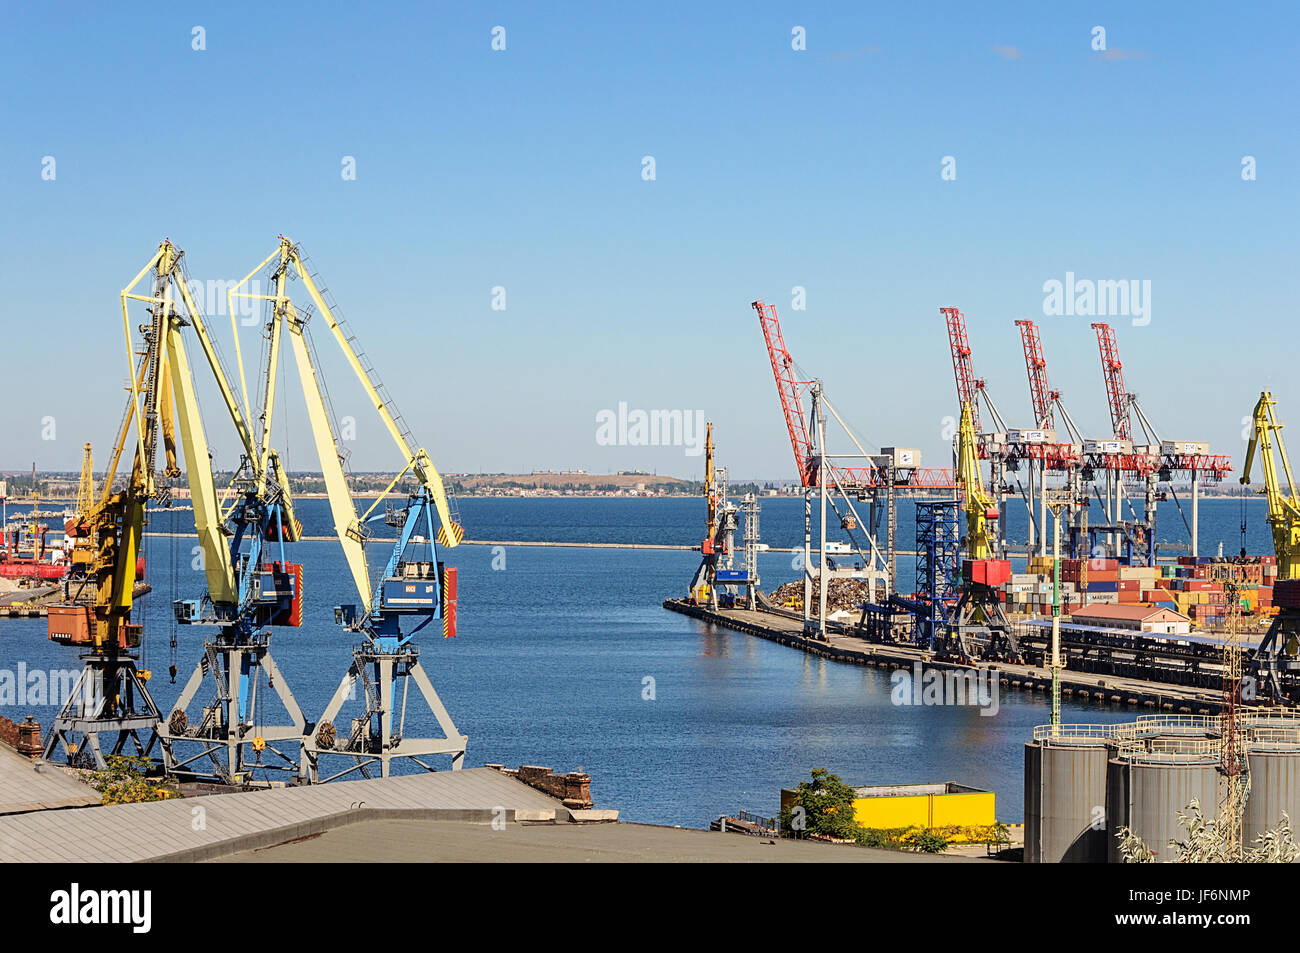 Commercial Sea Port in Odessa, Ukraine Stock Photo - Alamy